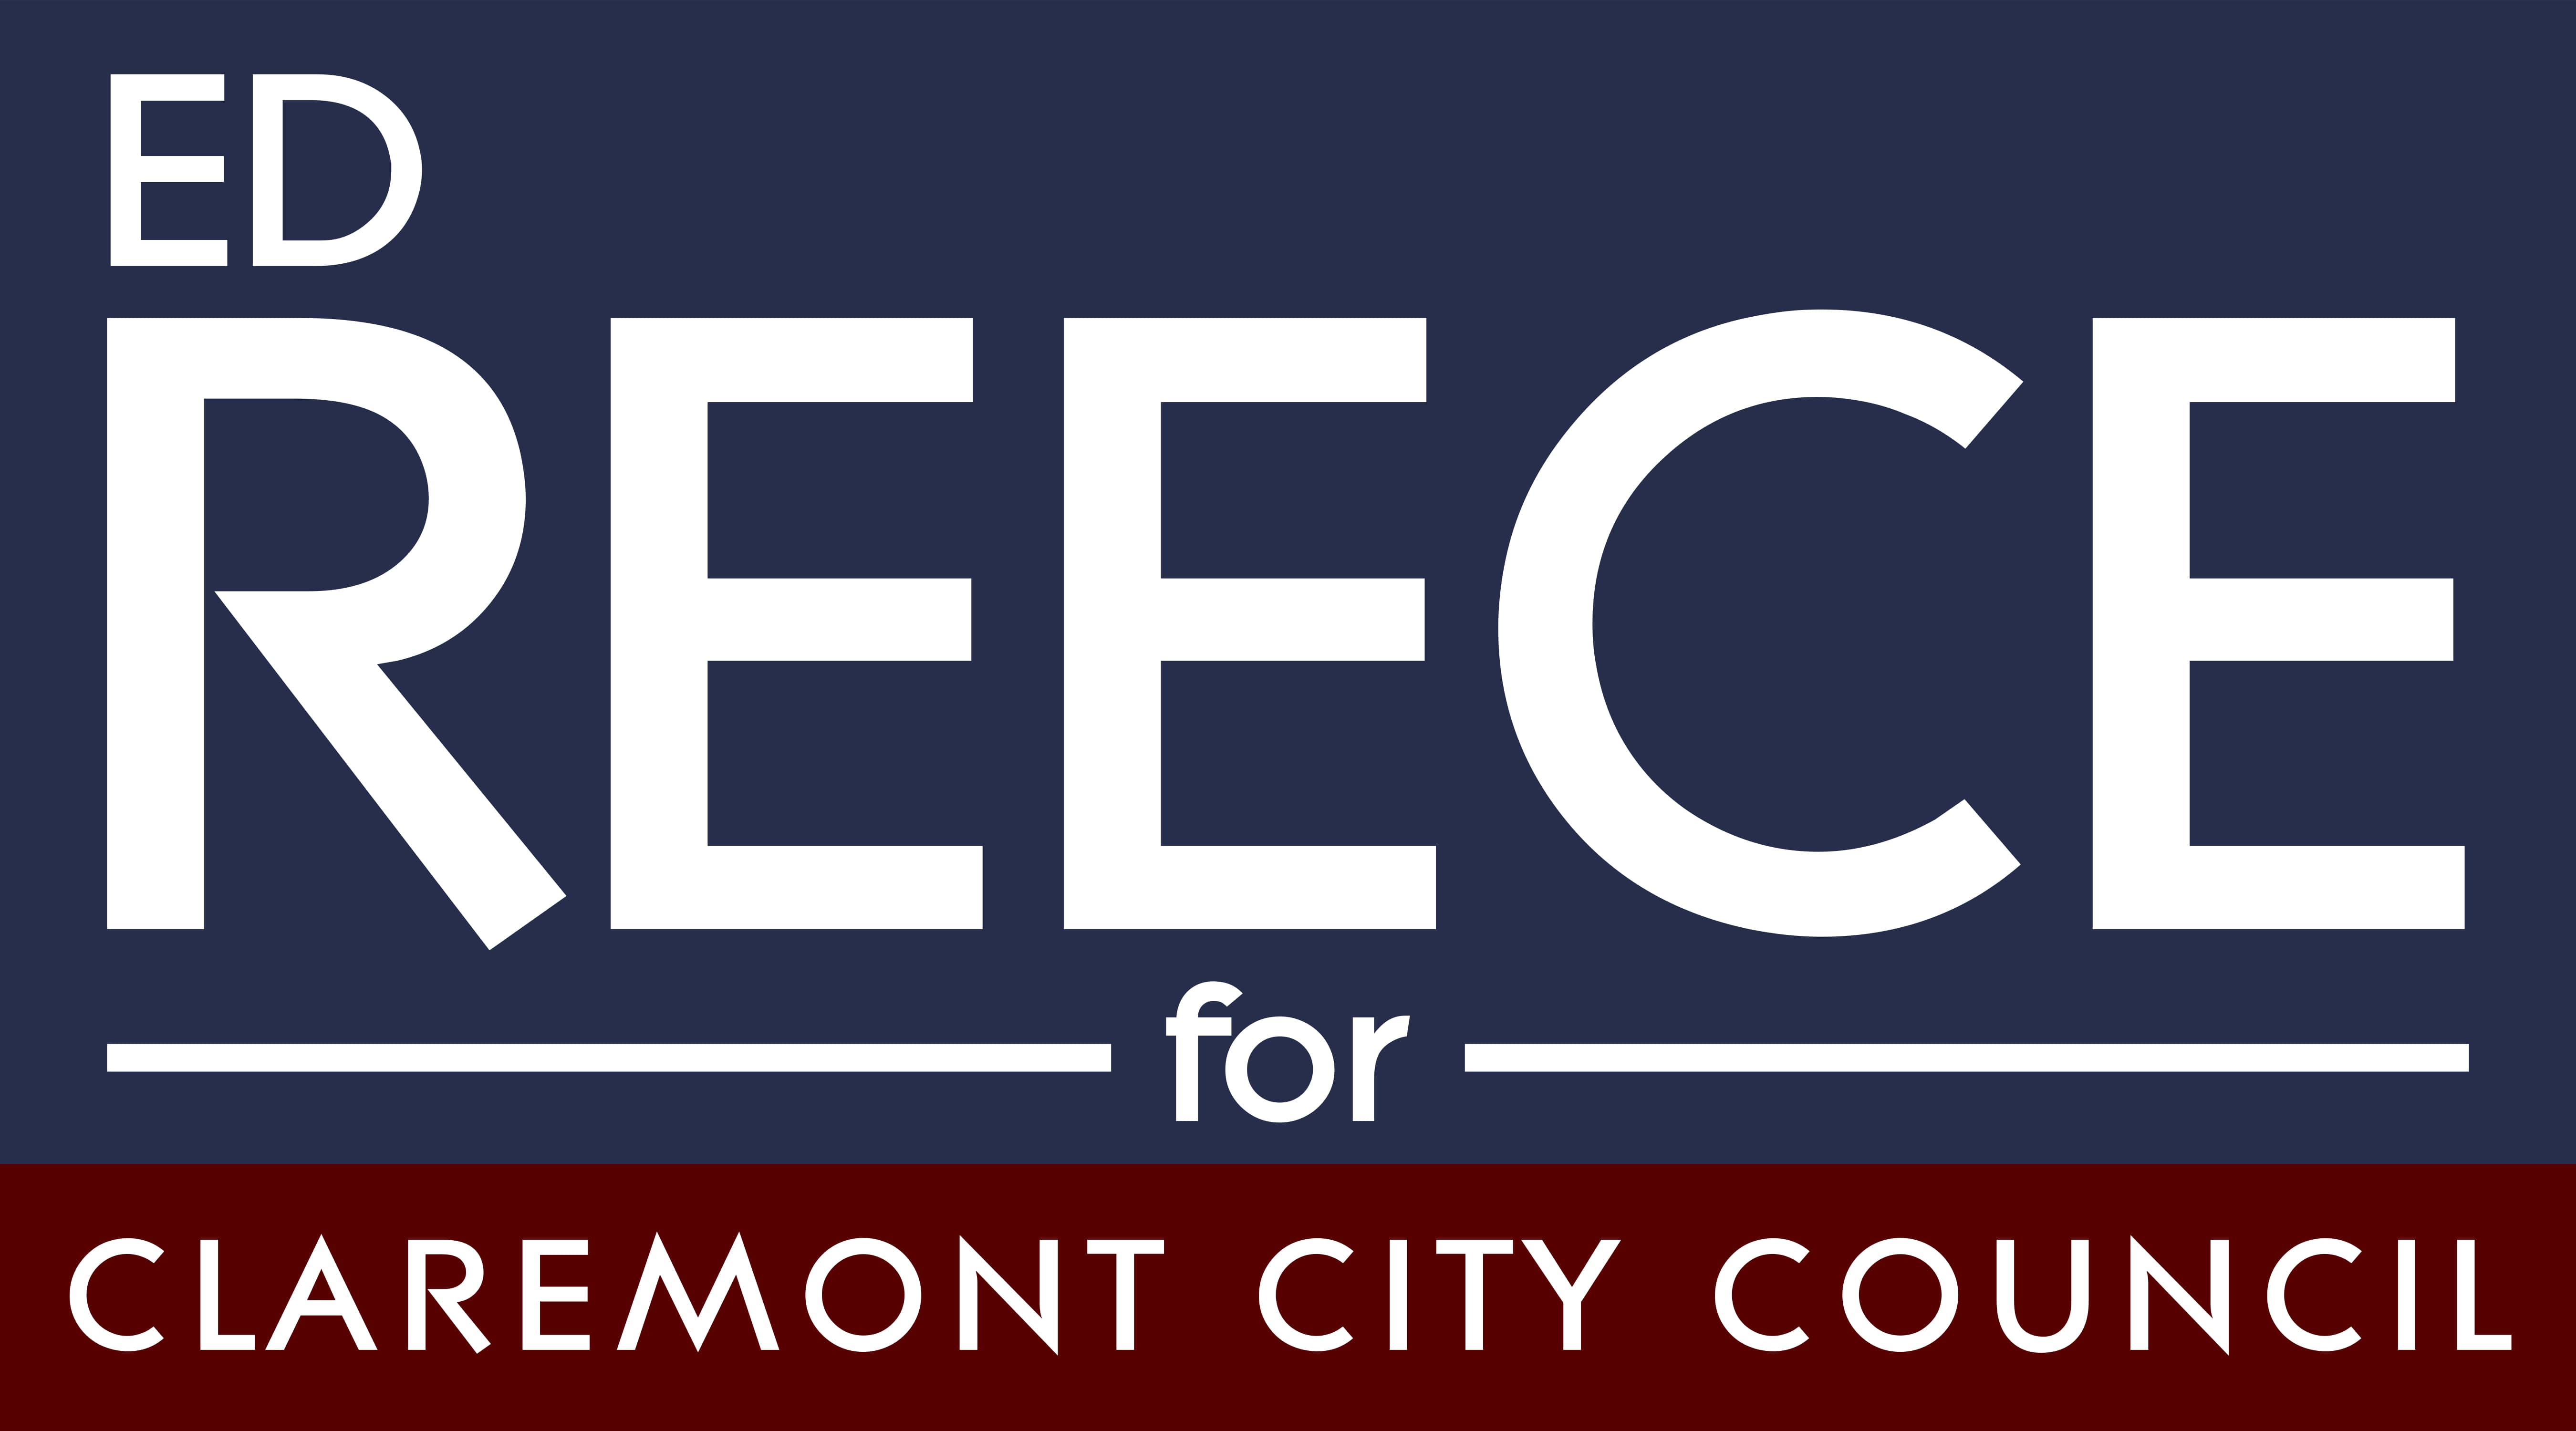 Ed Reece for Claremont City Council logo